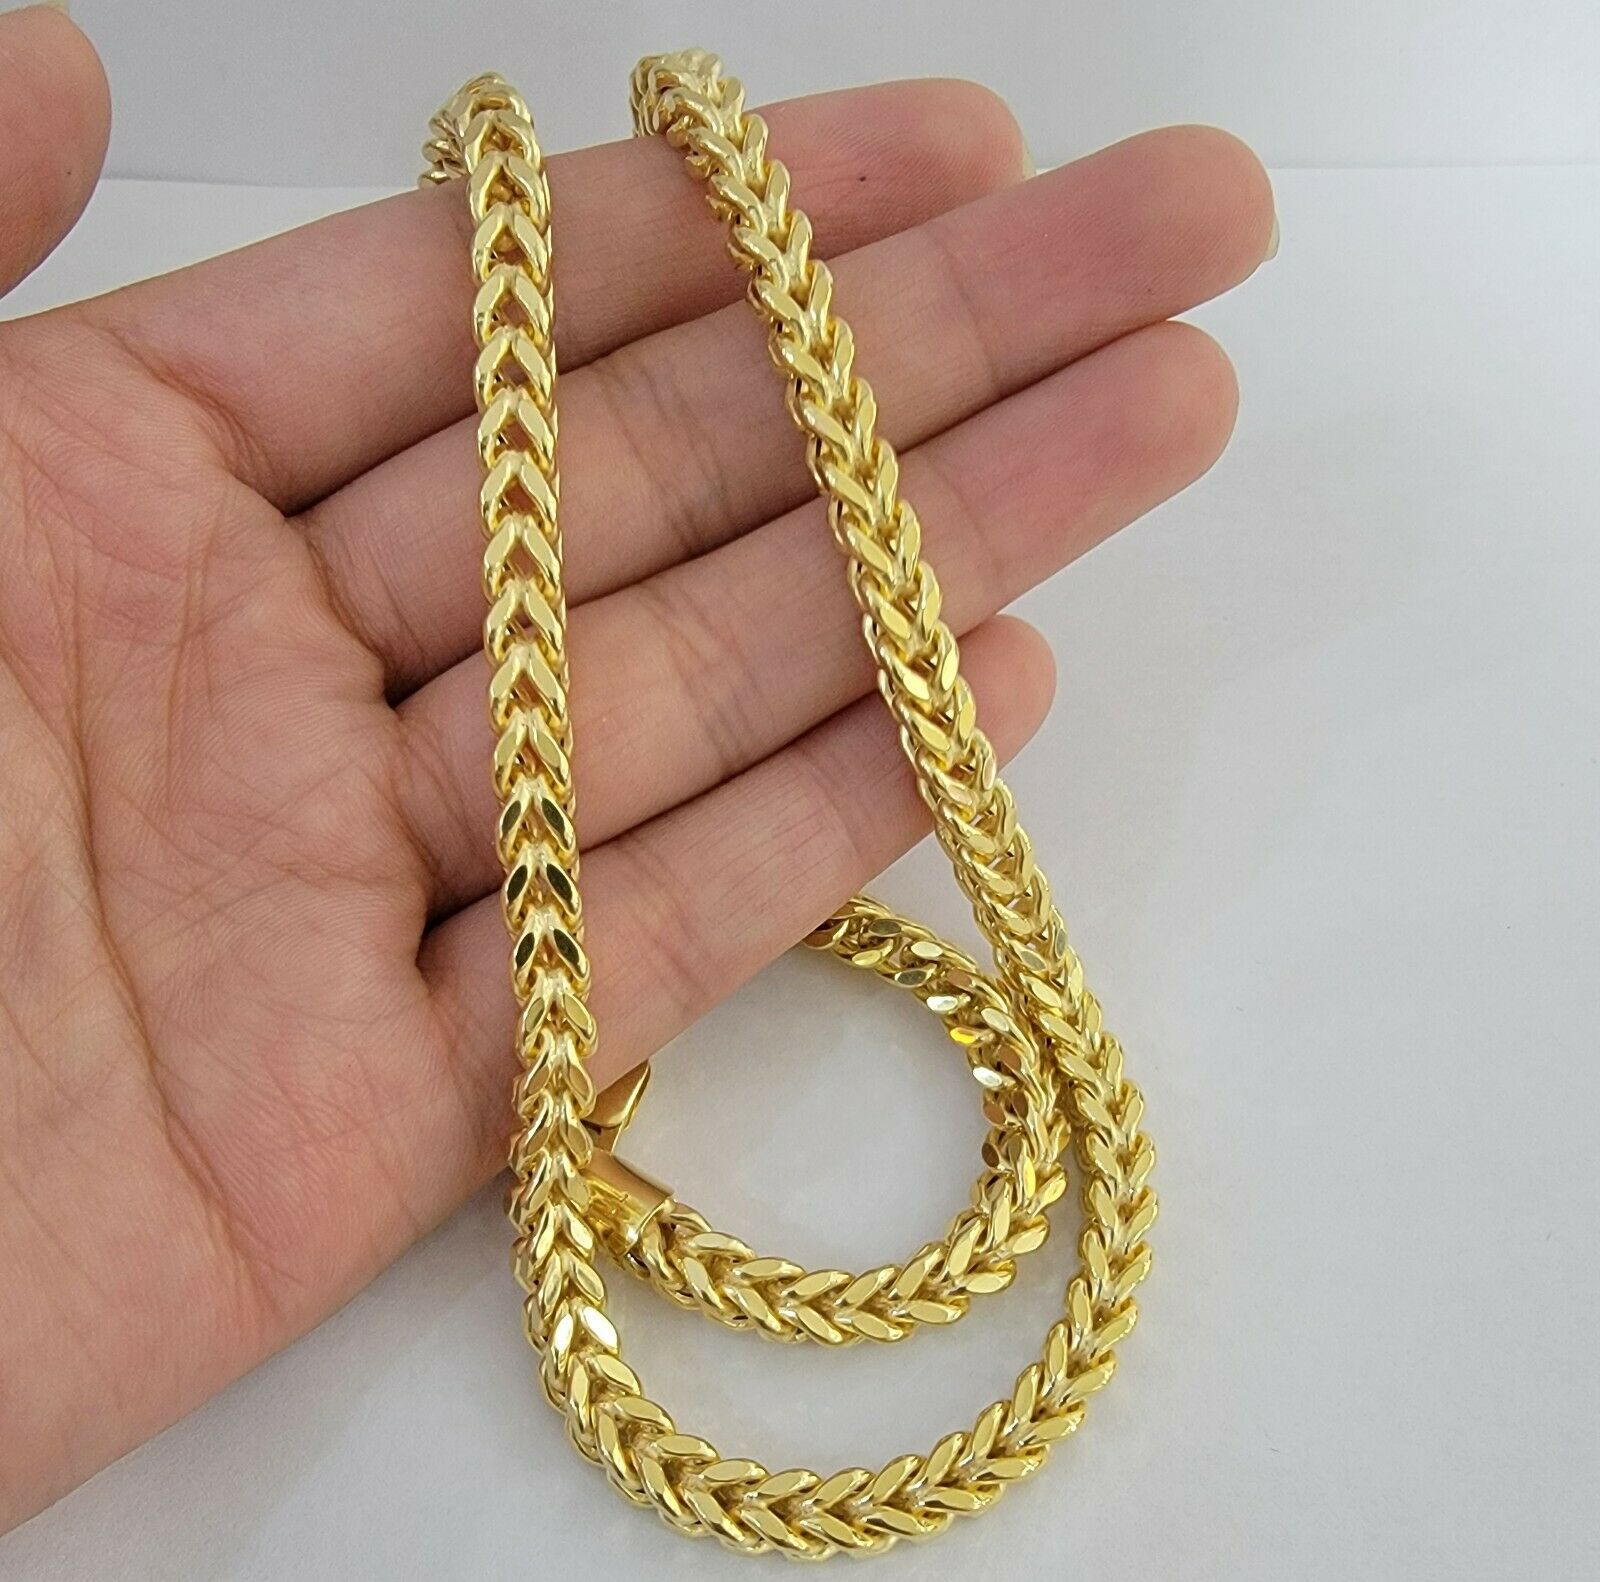 10K Gold Franco Link Chain 26